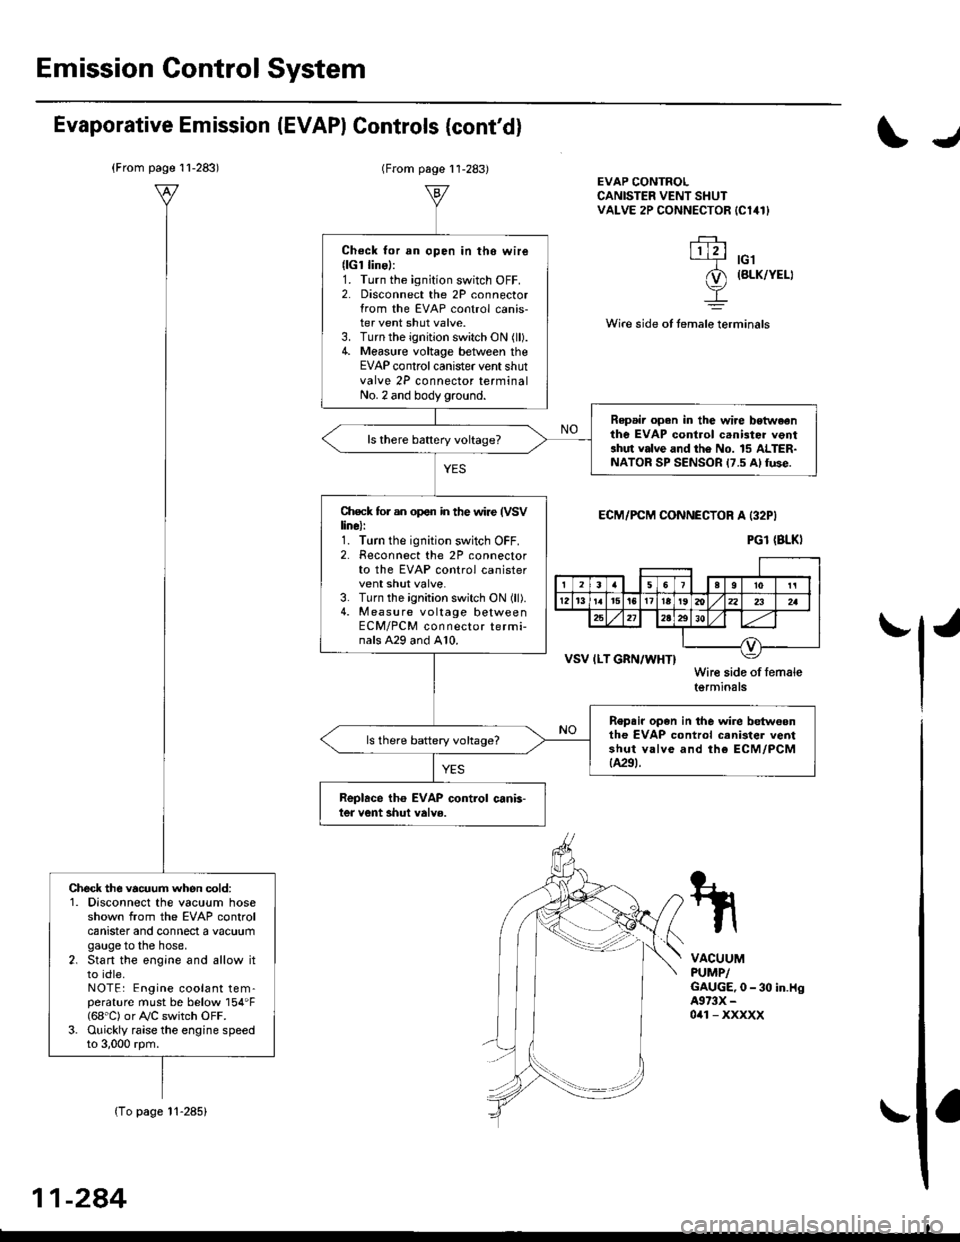 HONDA CIVIC 1996 6.G Owners Guide Emission Control System
Evaporative Emission (EVAPI Controls (contdl
1
EVAP CONTROLCANISTER VENT SHUTVALVE 2P CONNECTOR IC141}
lltrt+ rcl
o) (8LK/YErl
I
temale terminalsWire side ot
ECM/PCM CONNECTOR